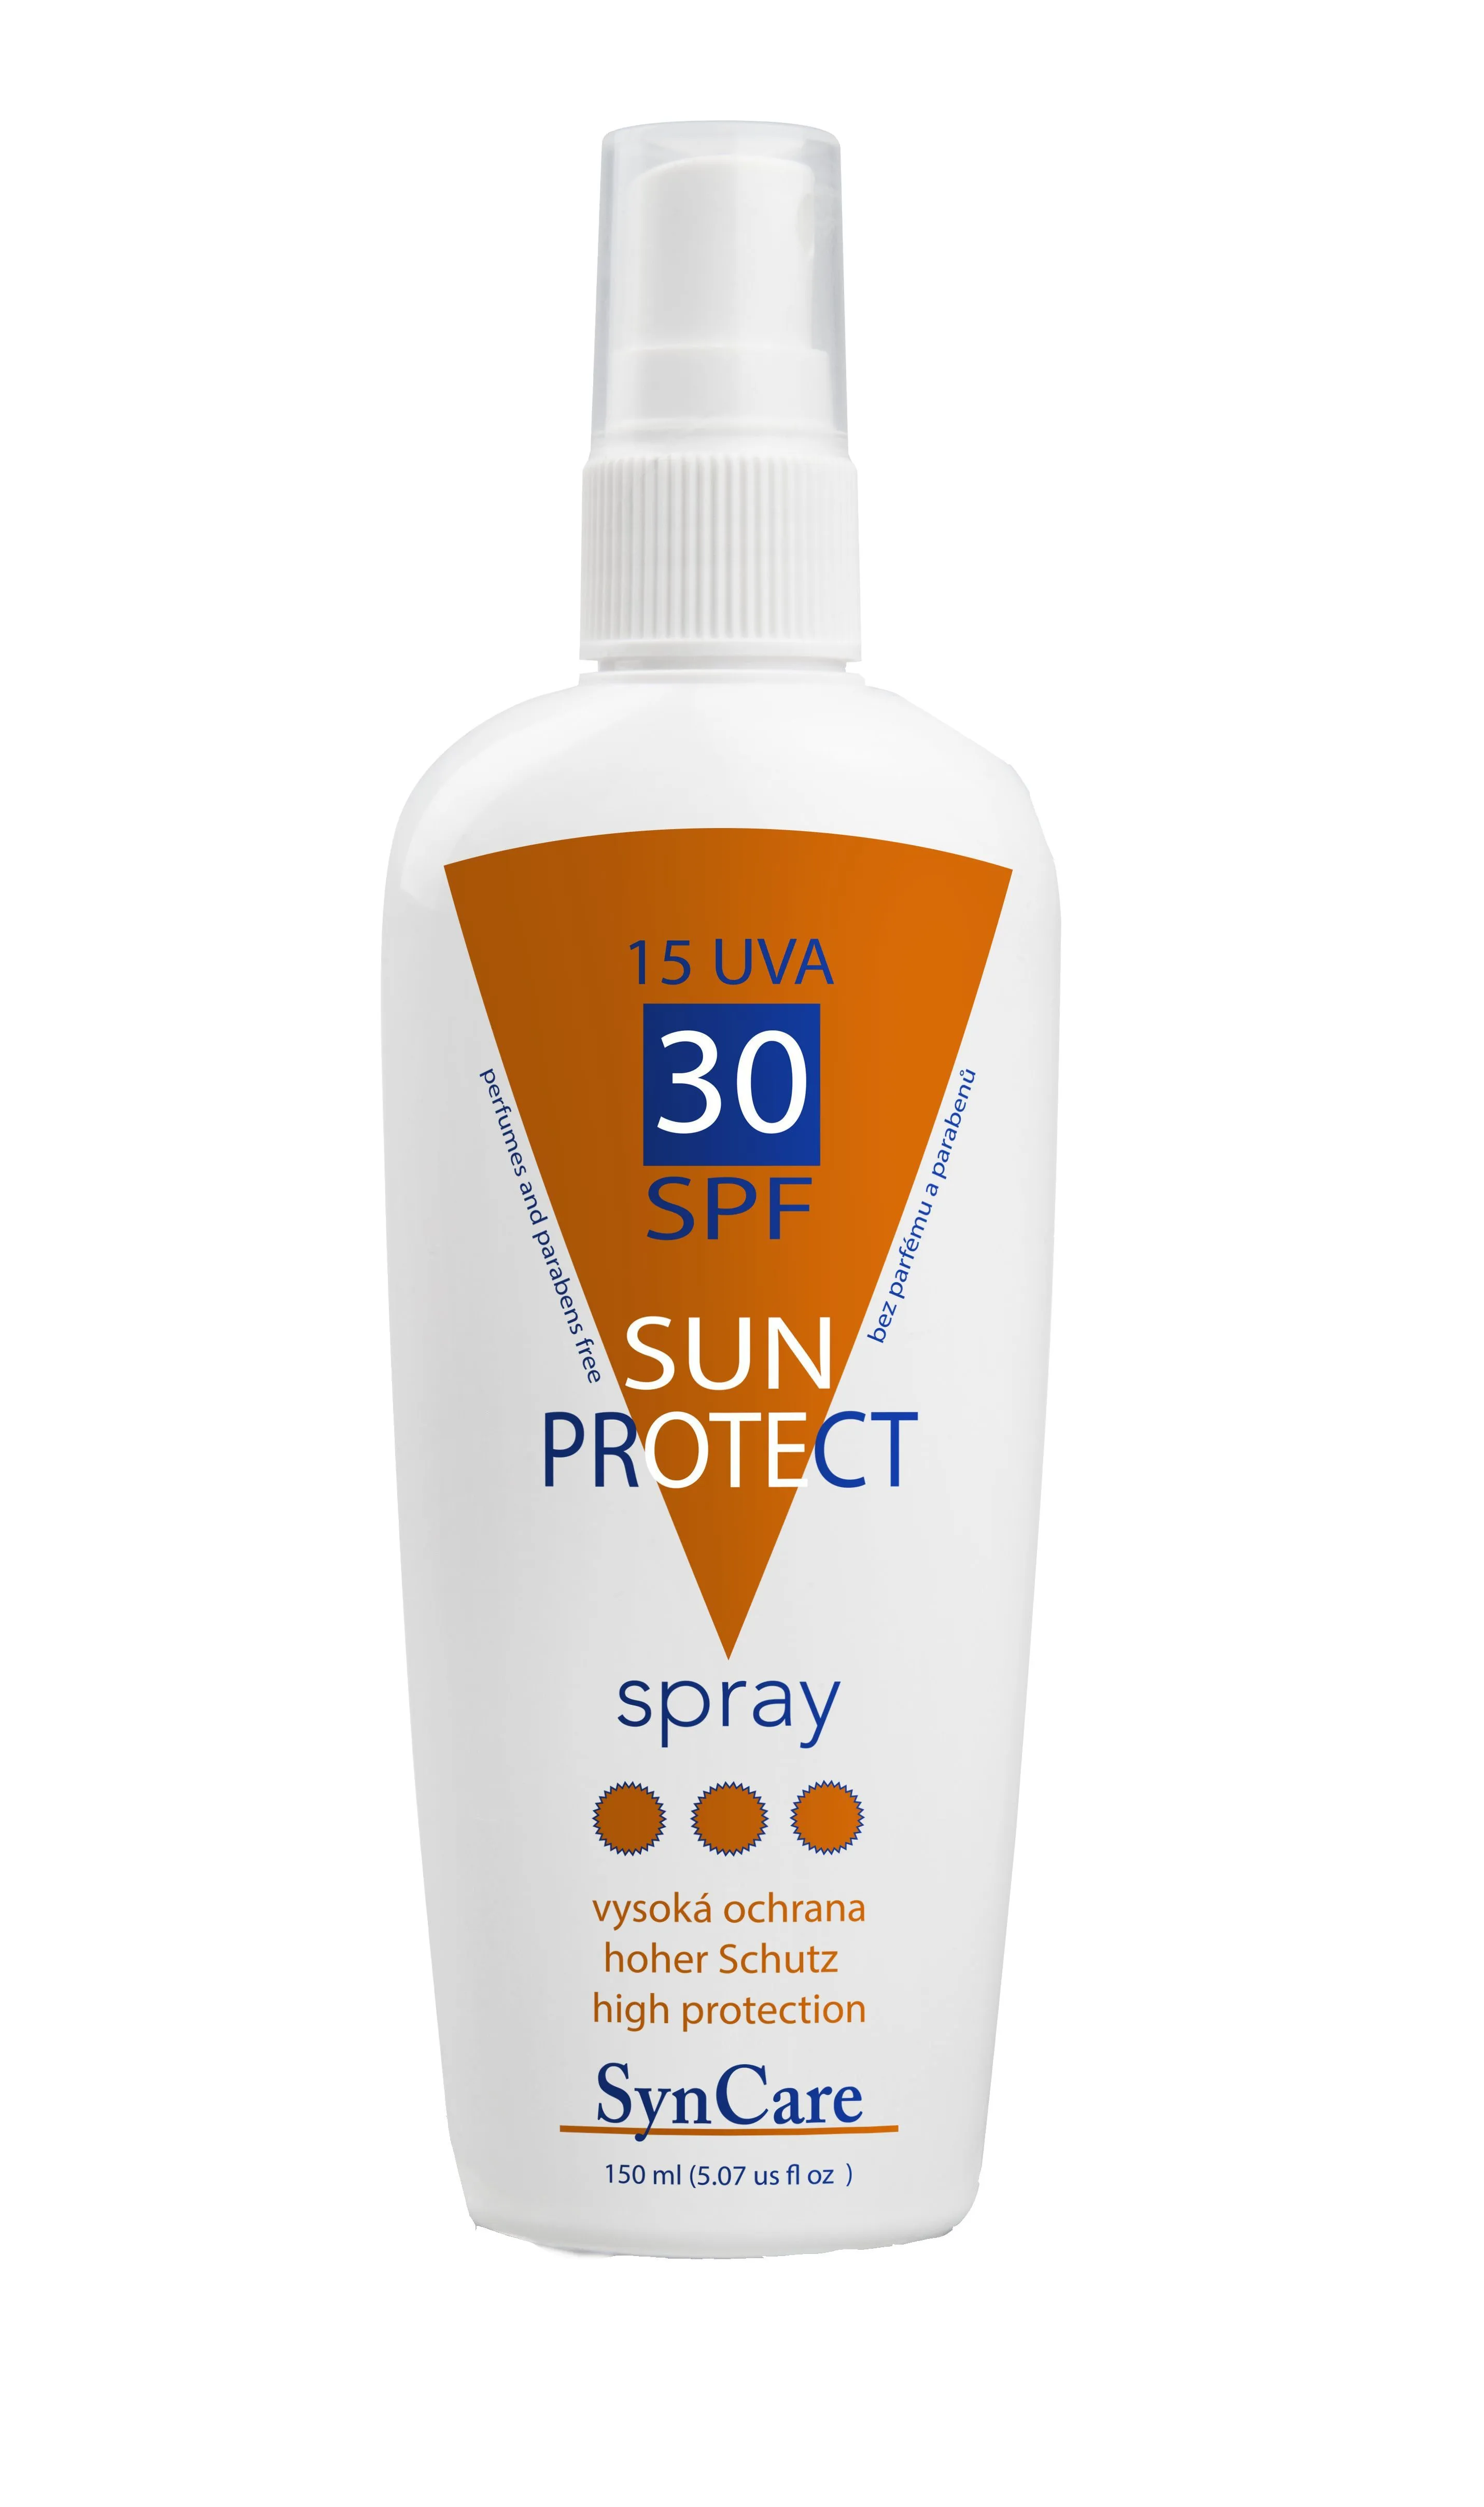 SynCare SUN PROTECT SPF 30 UVA 15 sprej 150 ml